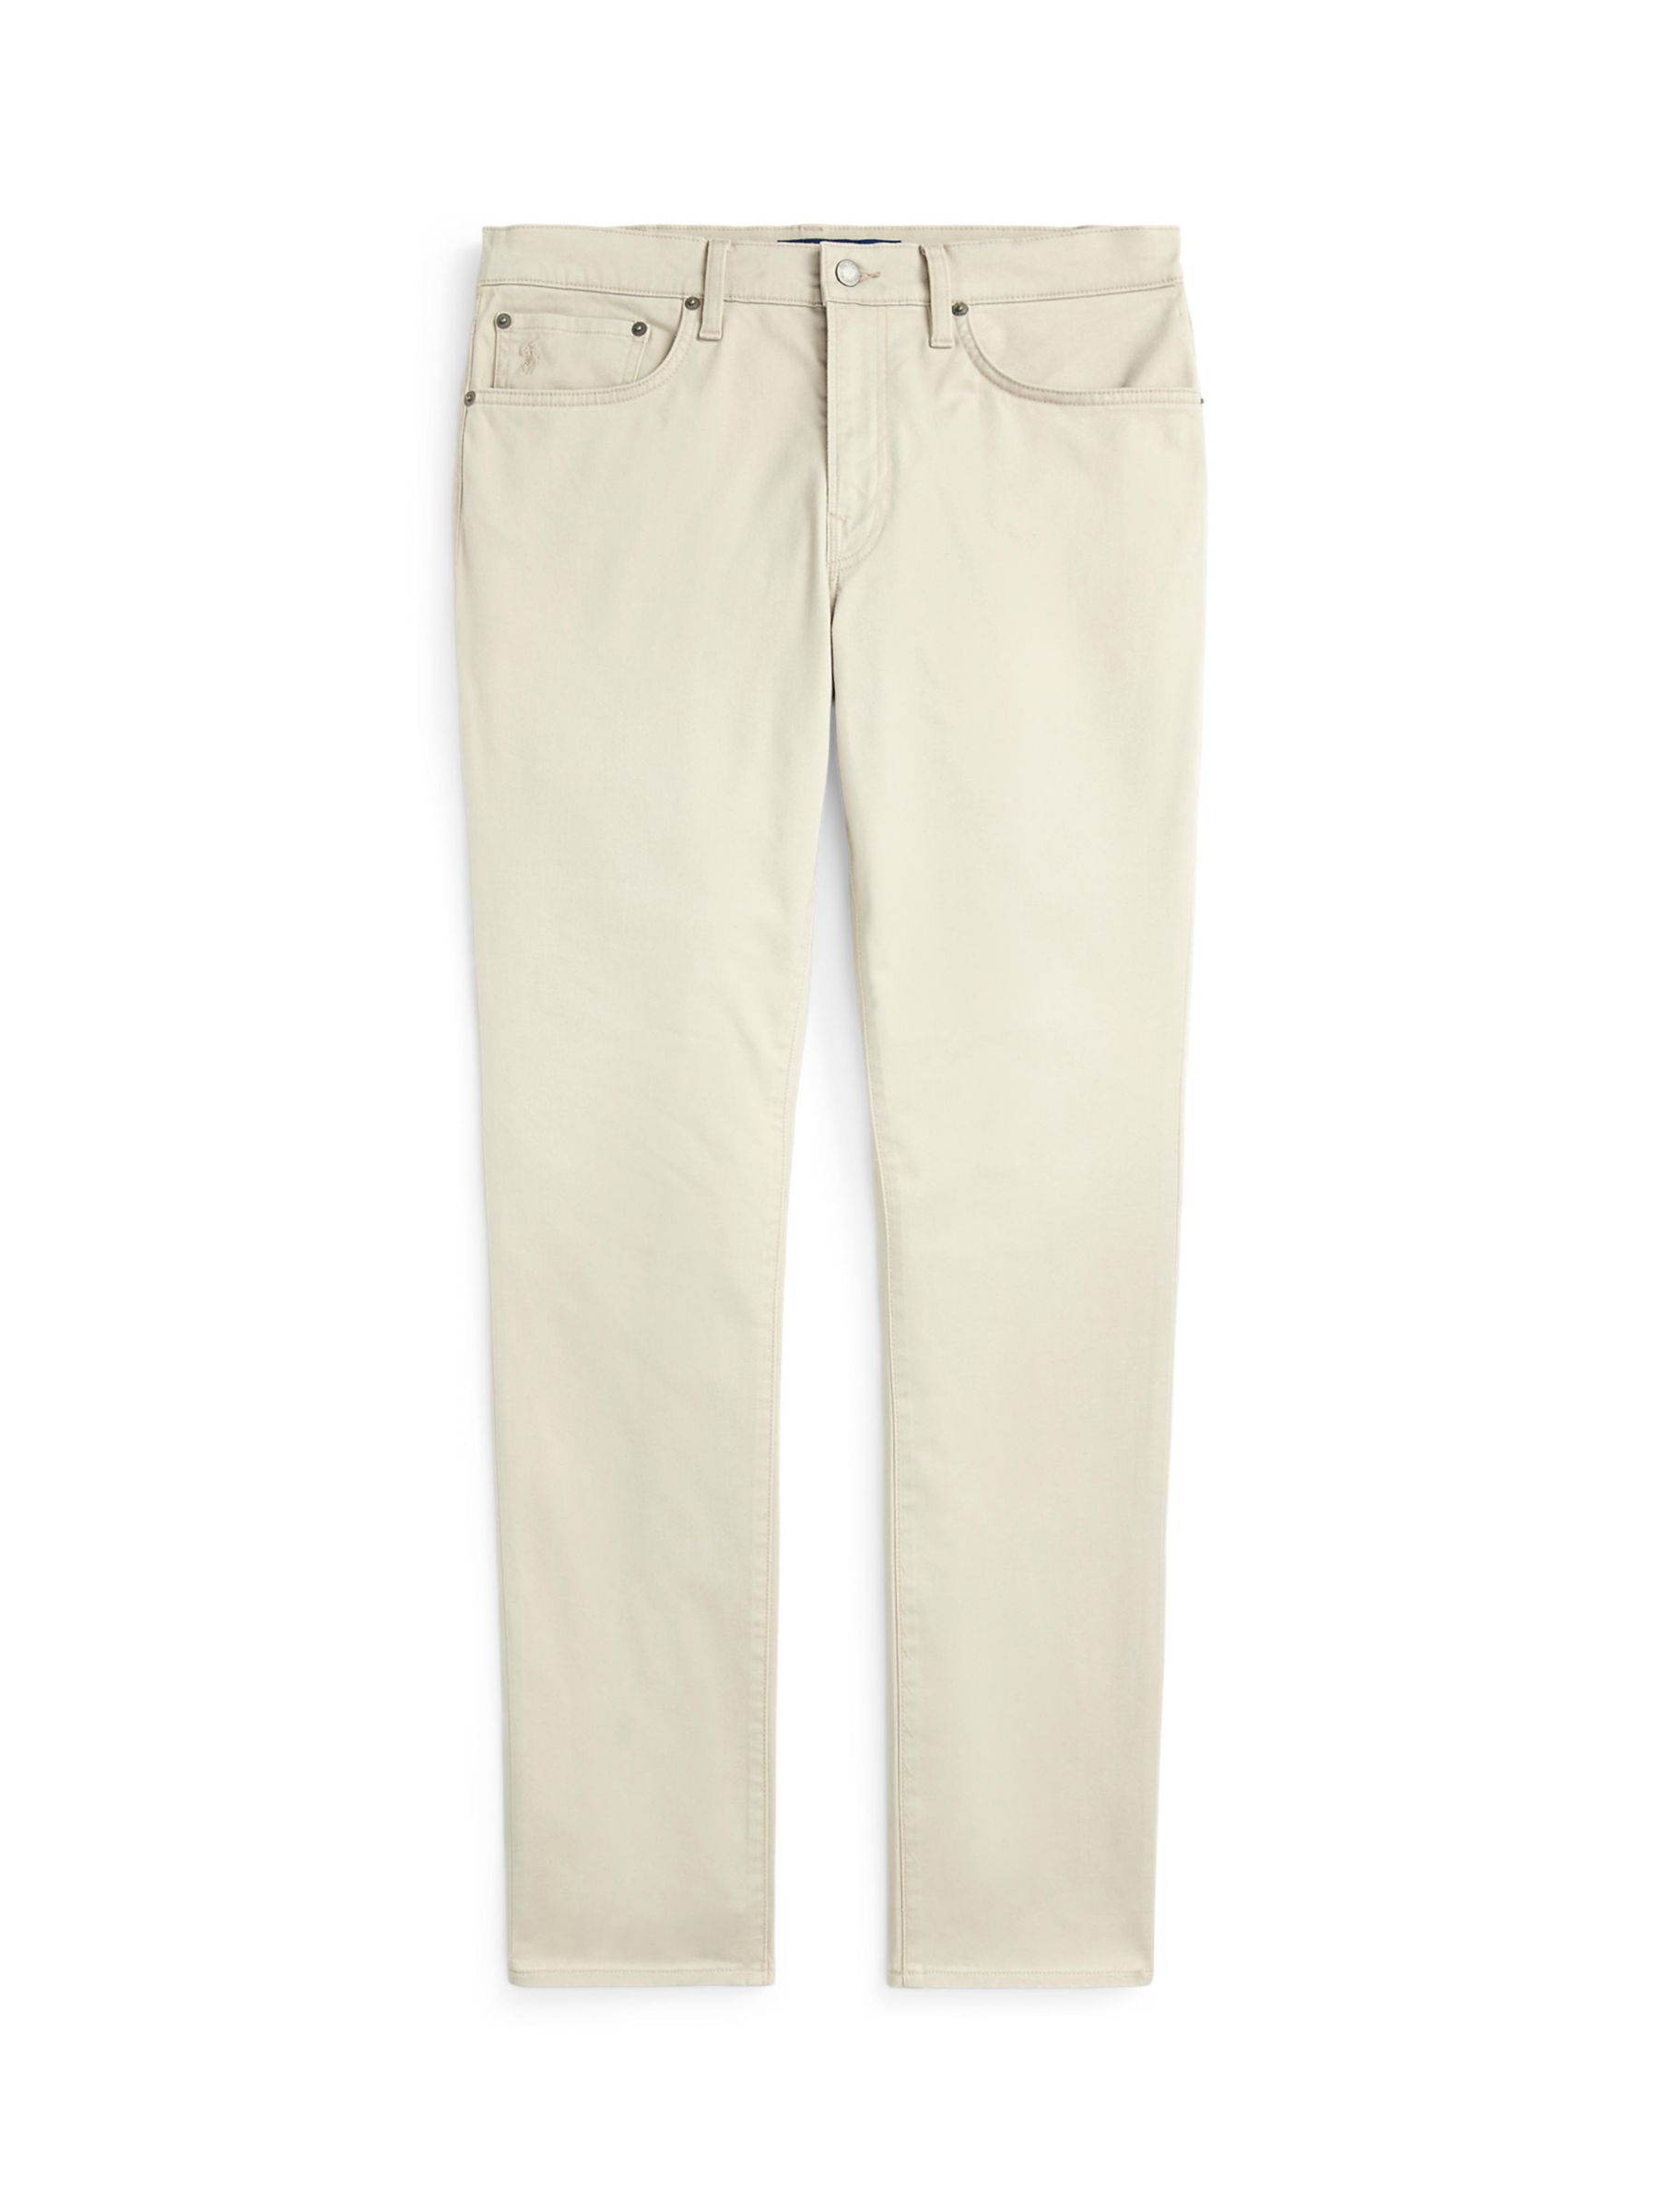 Polo Ralph Lauren Sullivan Slim Stretch Sateen Trousers, Surplus Khaki, 32R